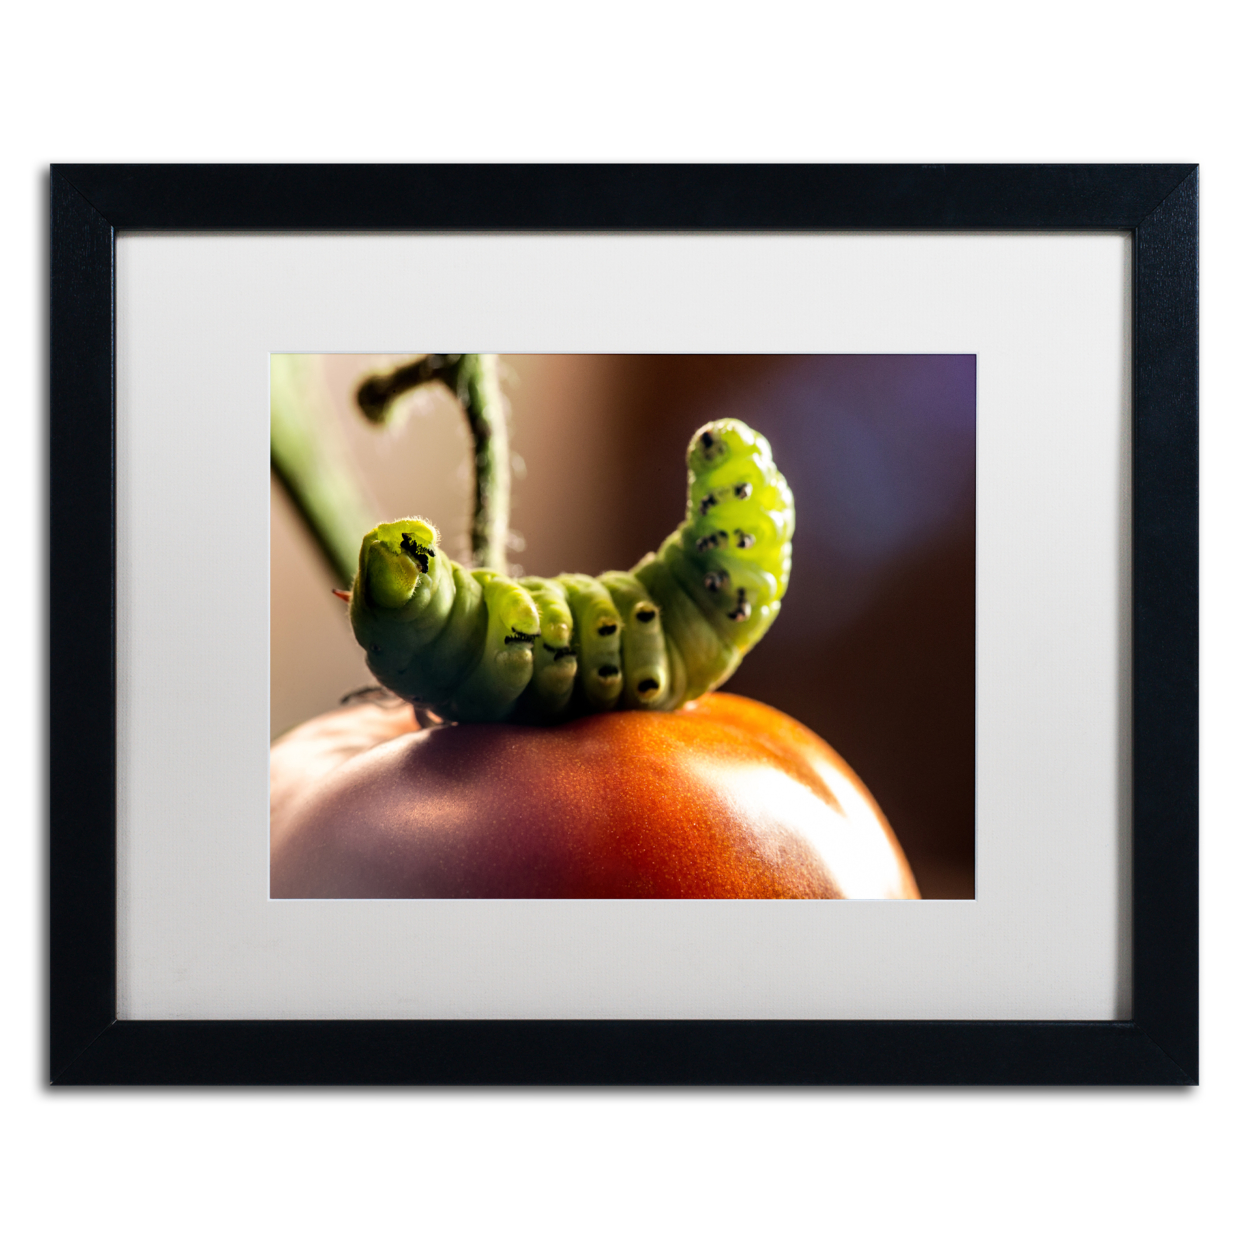 Jason Shaffer 'Caterpillar & Tomato' Black Wooden Framed Art 18 X 22 Inches